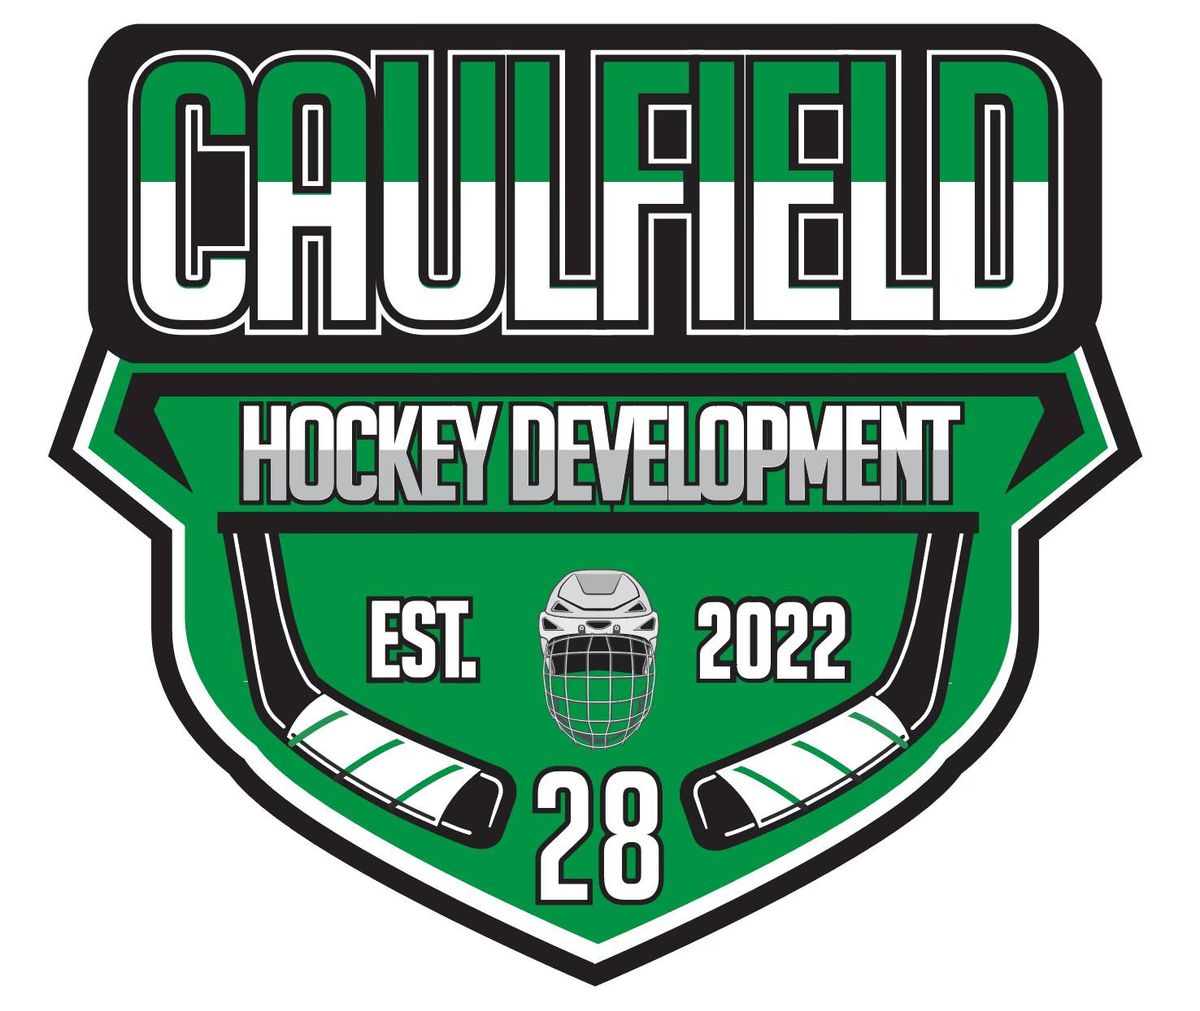 Caulfield Hockey Development Camp